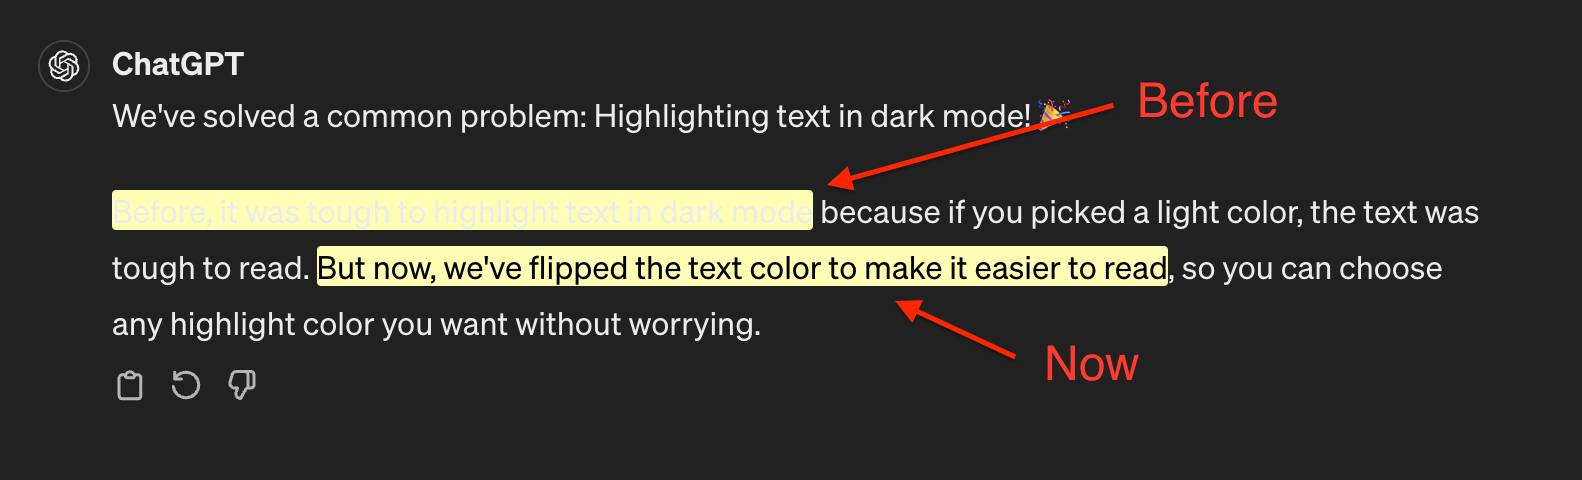 Highlighting in dark mode